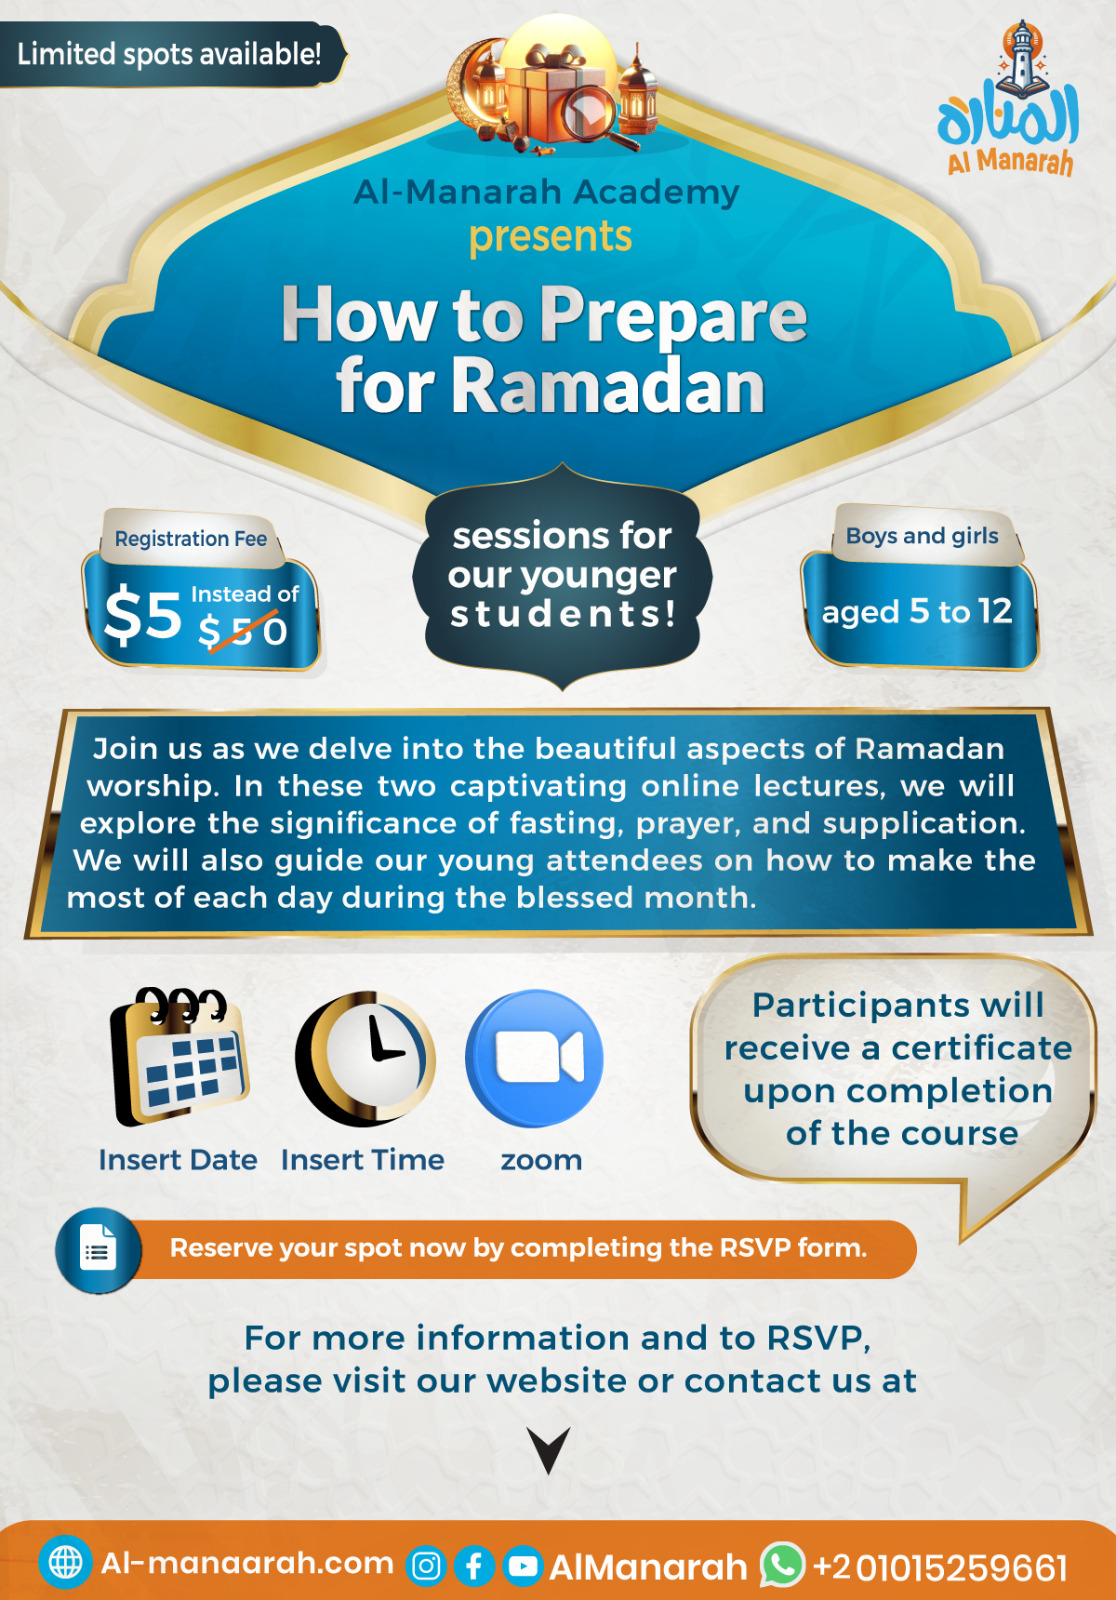 "How to Prepare for Ramadan"